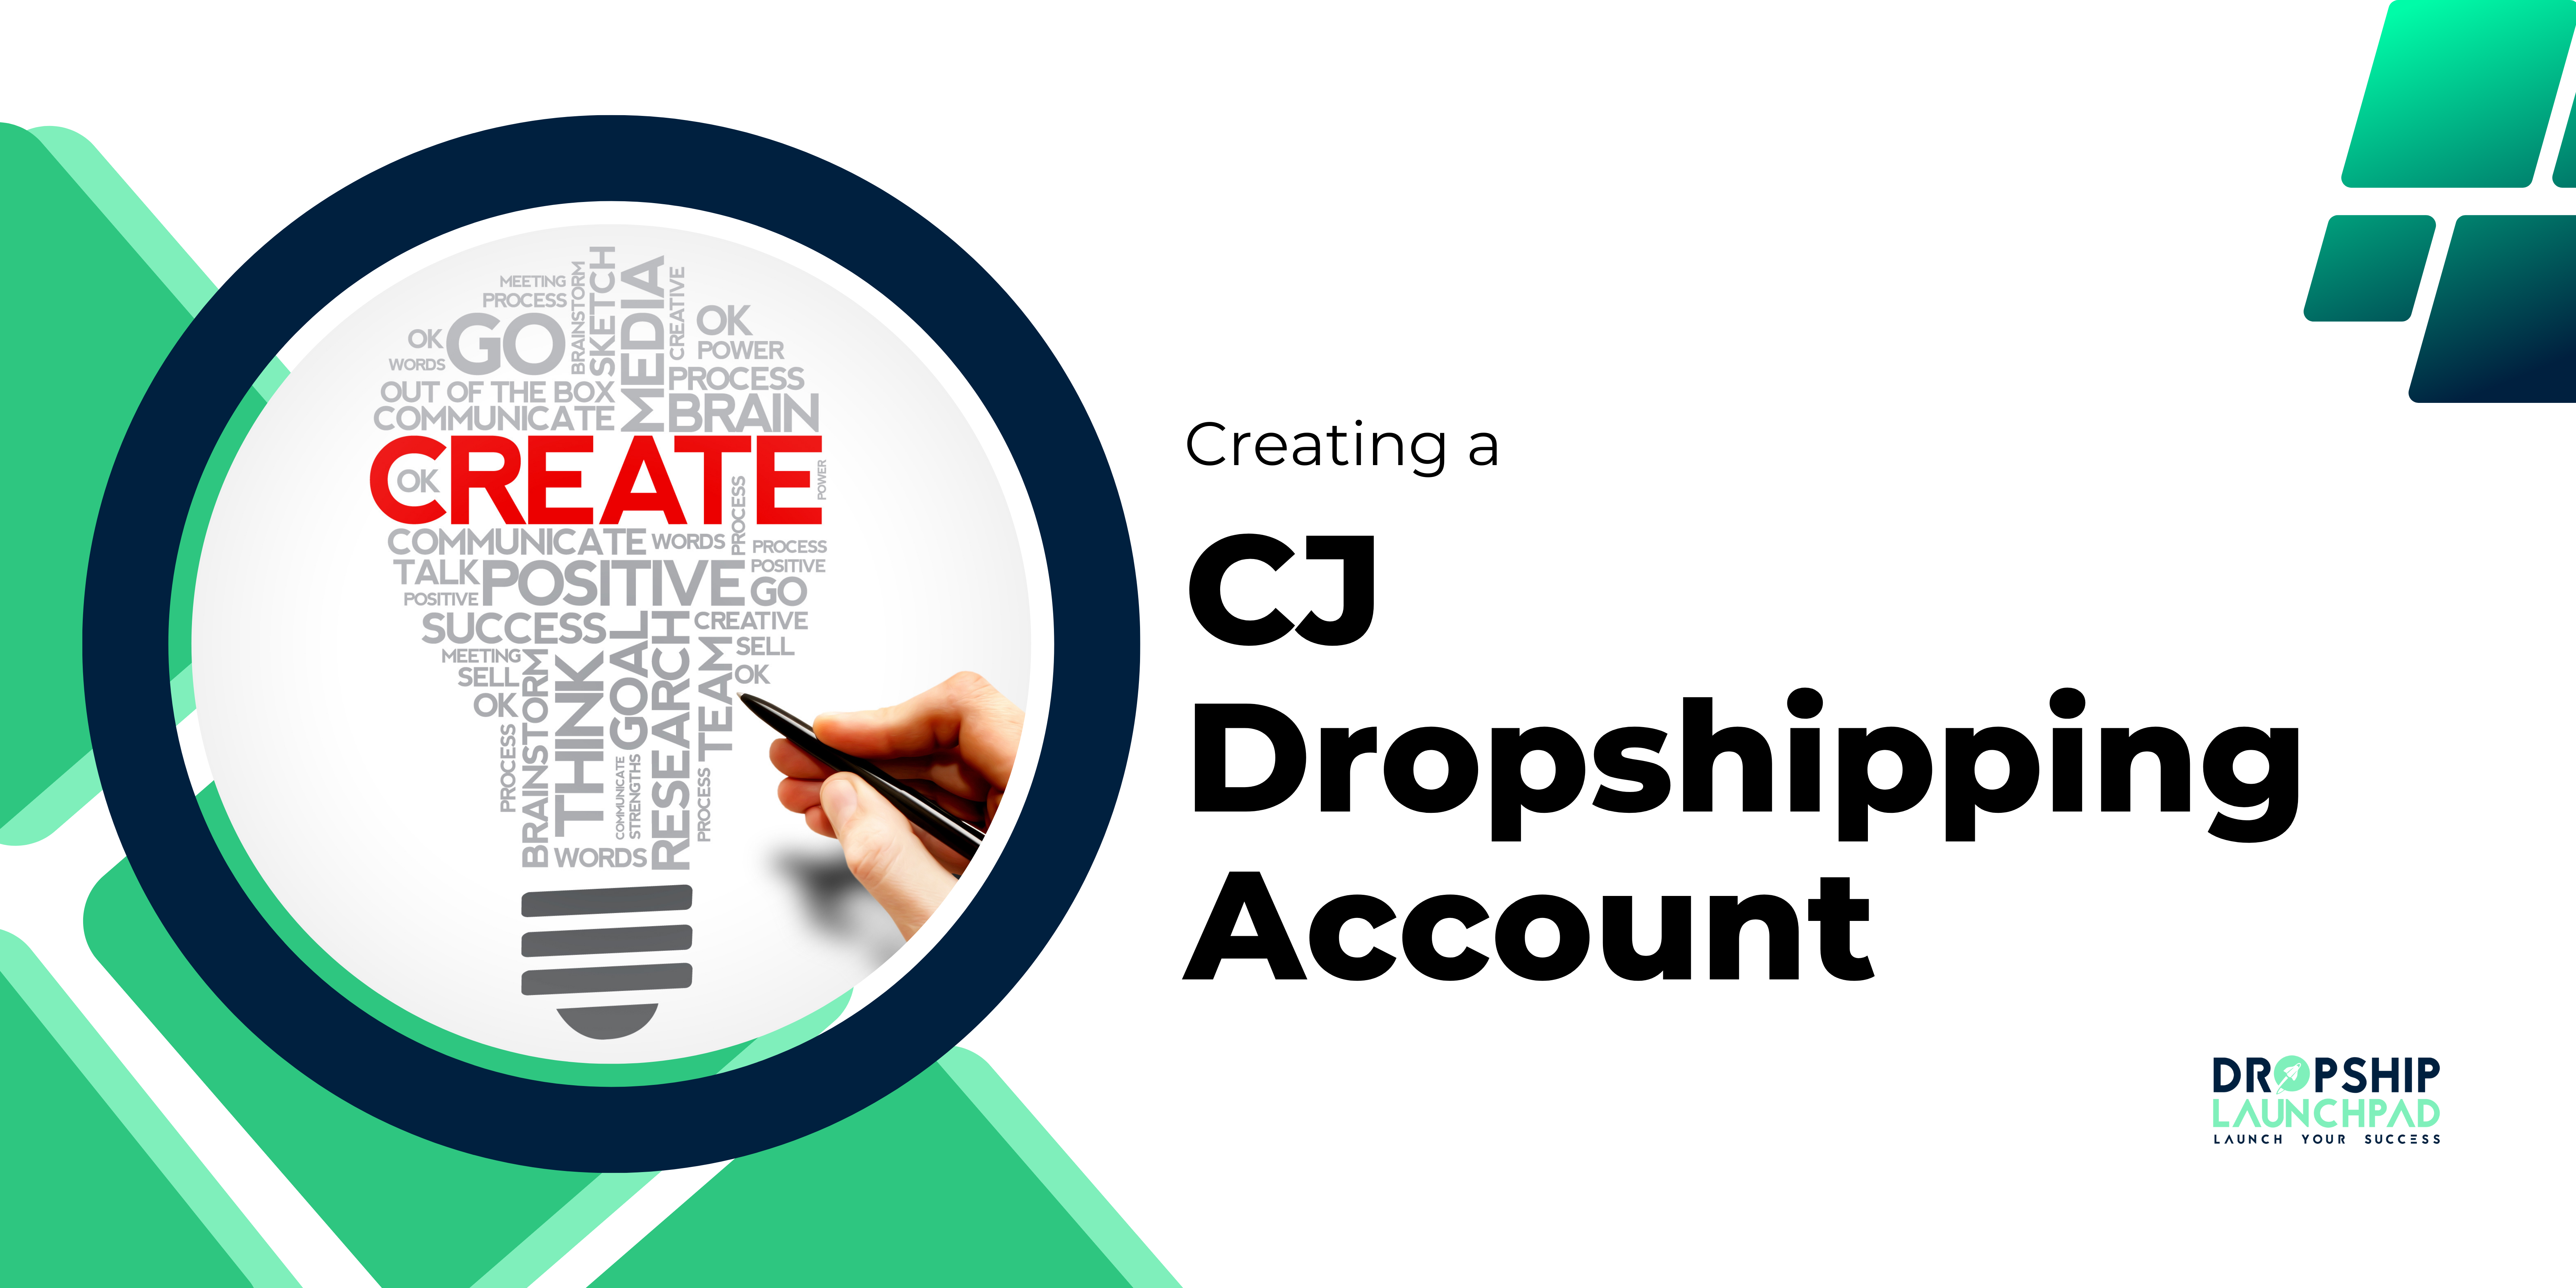 Creating a CJ Dropshipping account